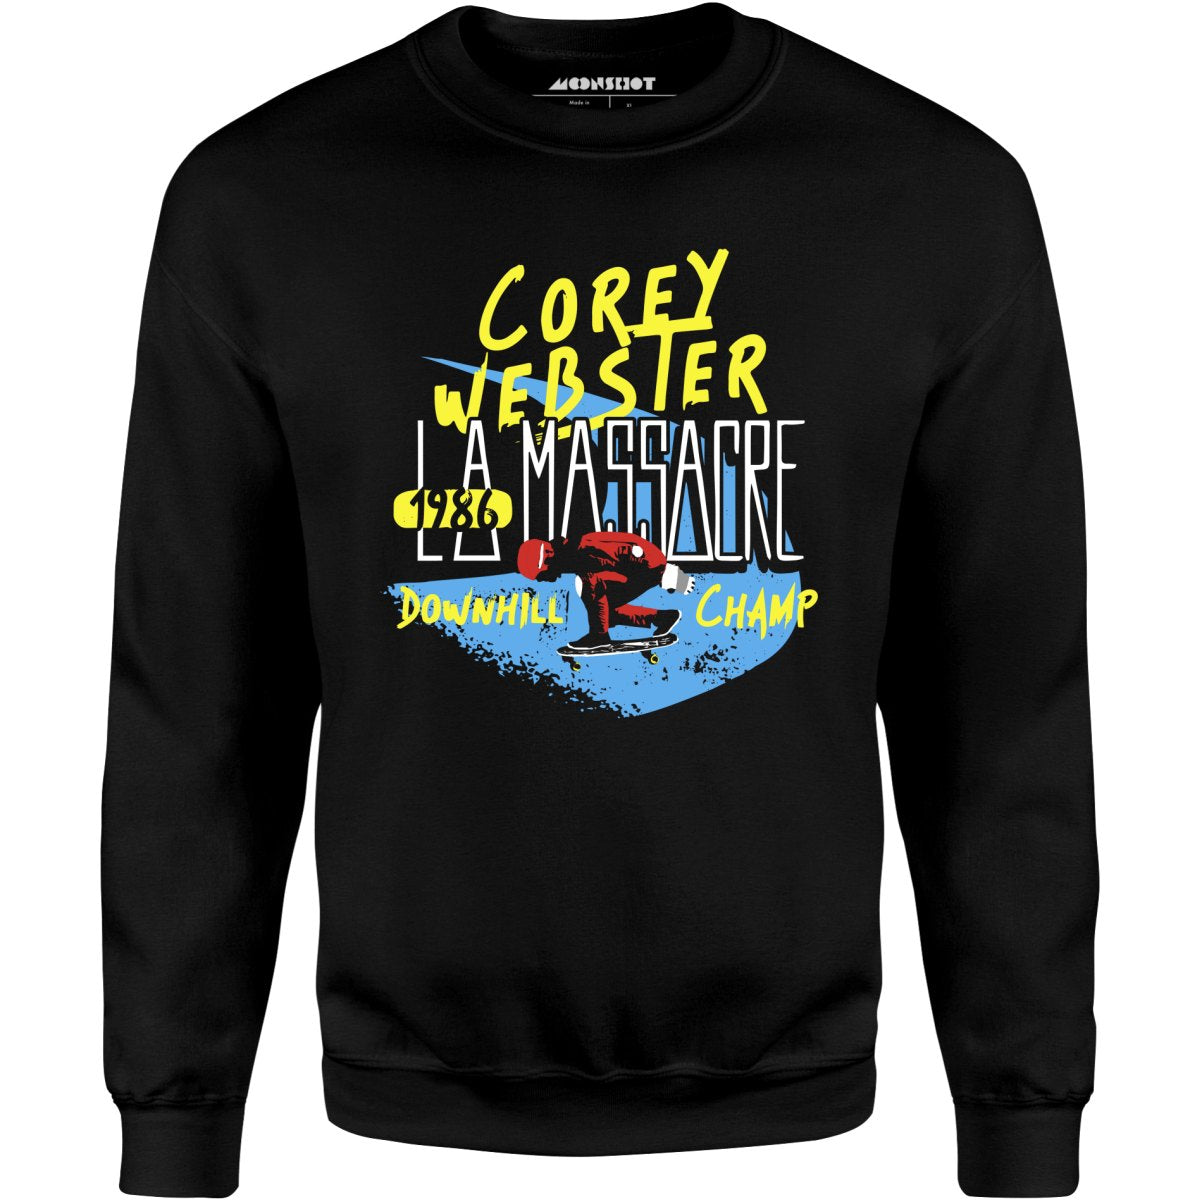 Corey Webster 1986 LA Massacre Downhill Champ - Unisex Sweatshirt